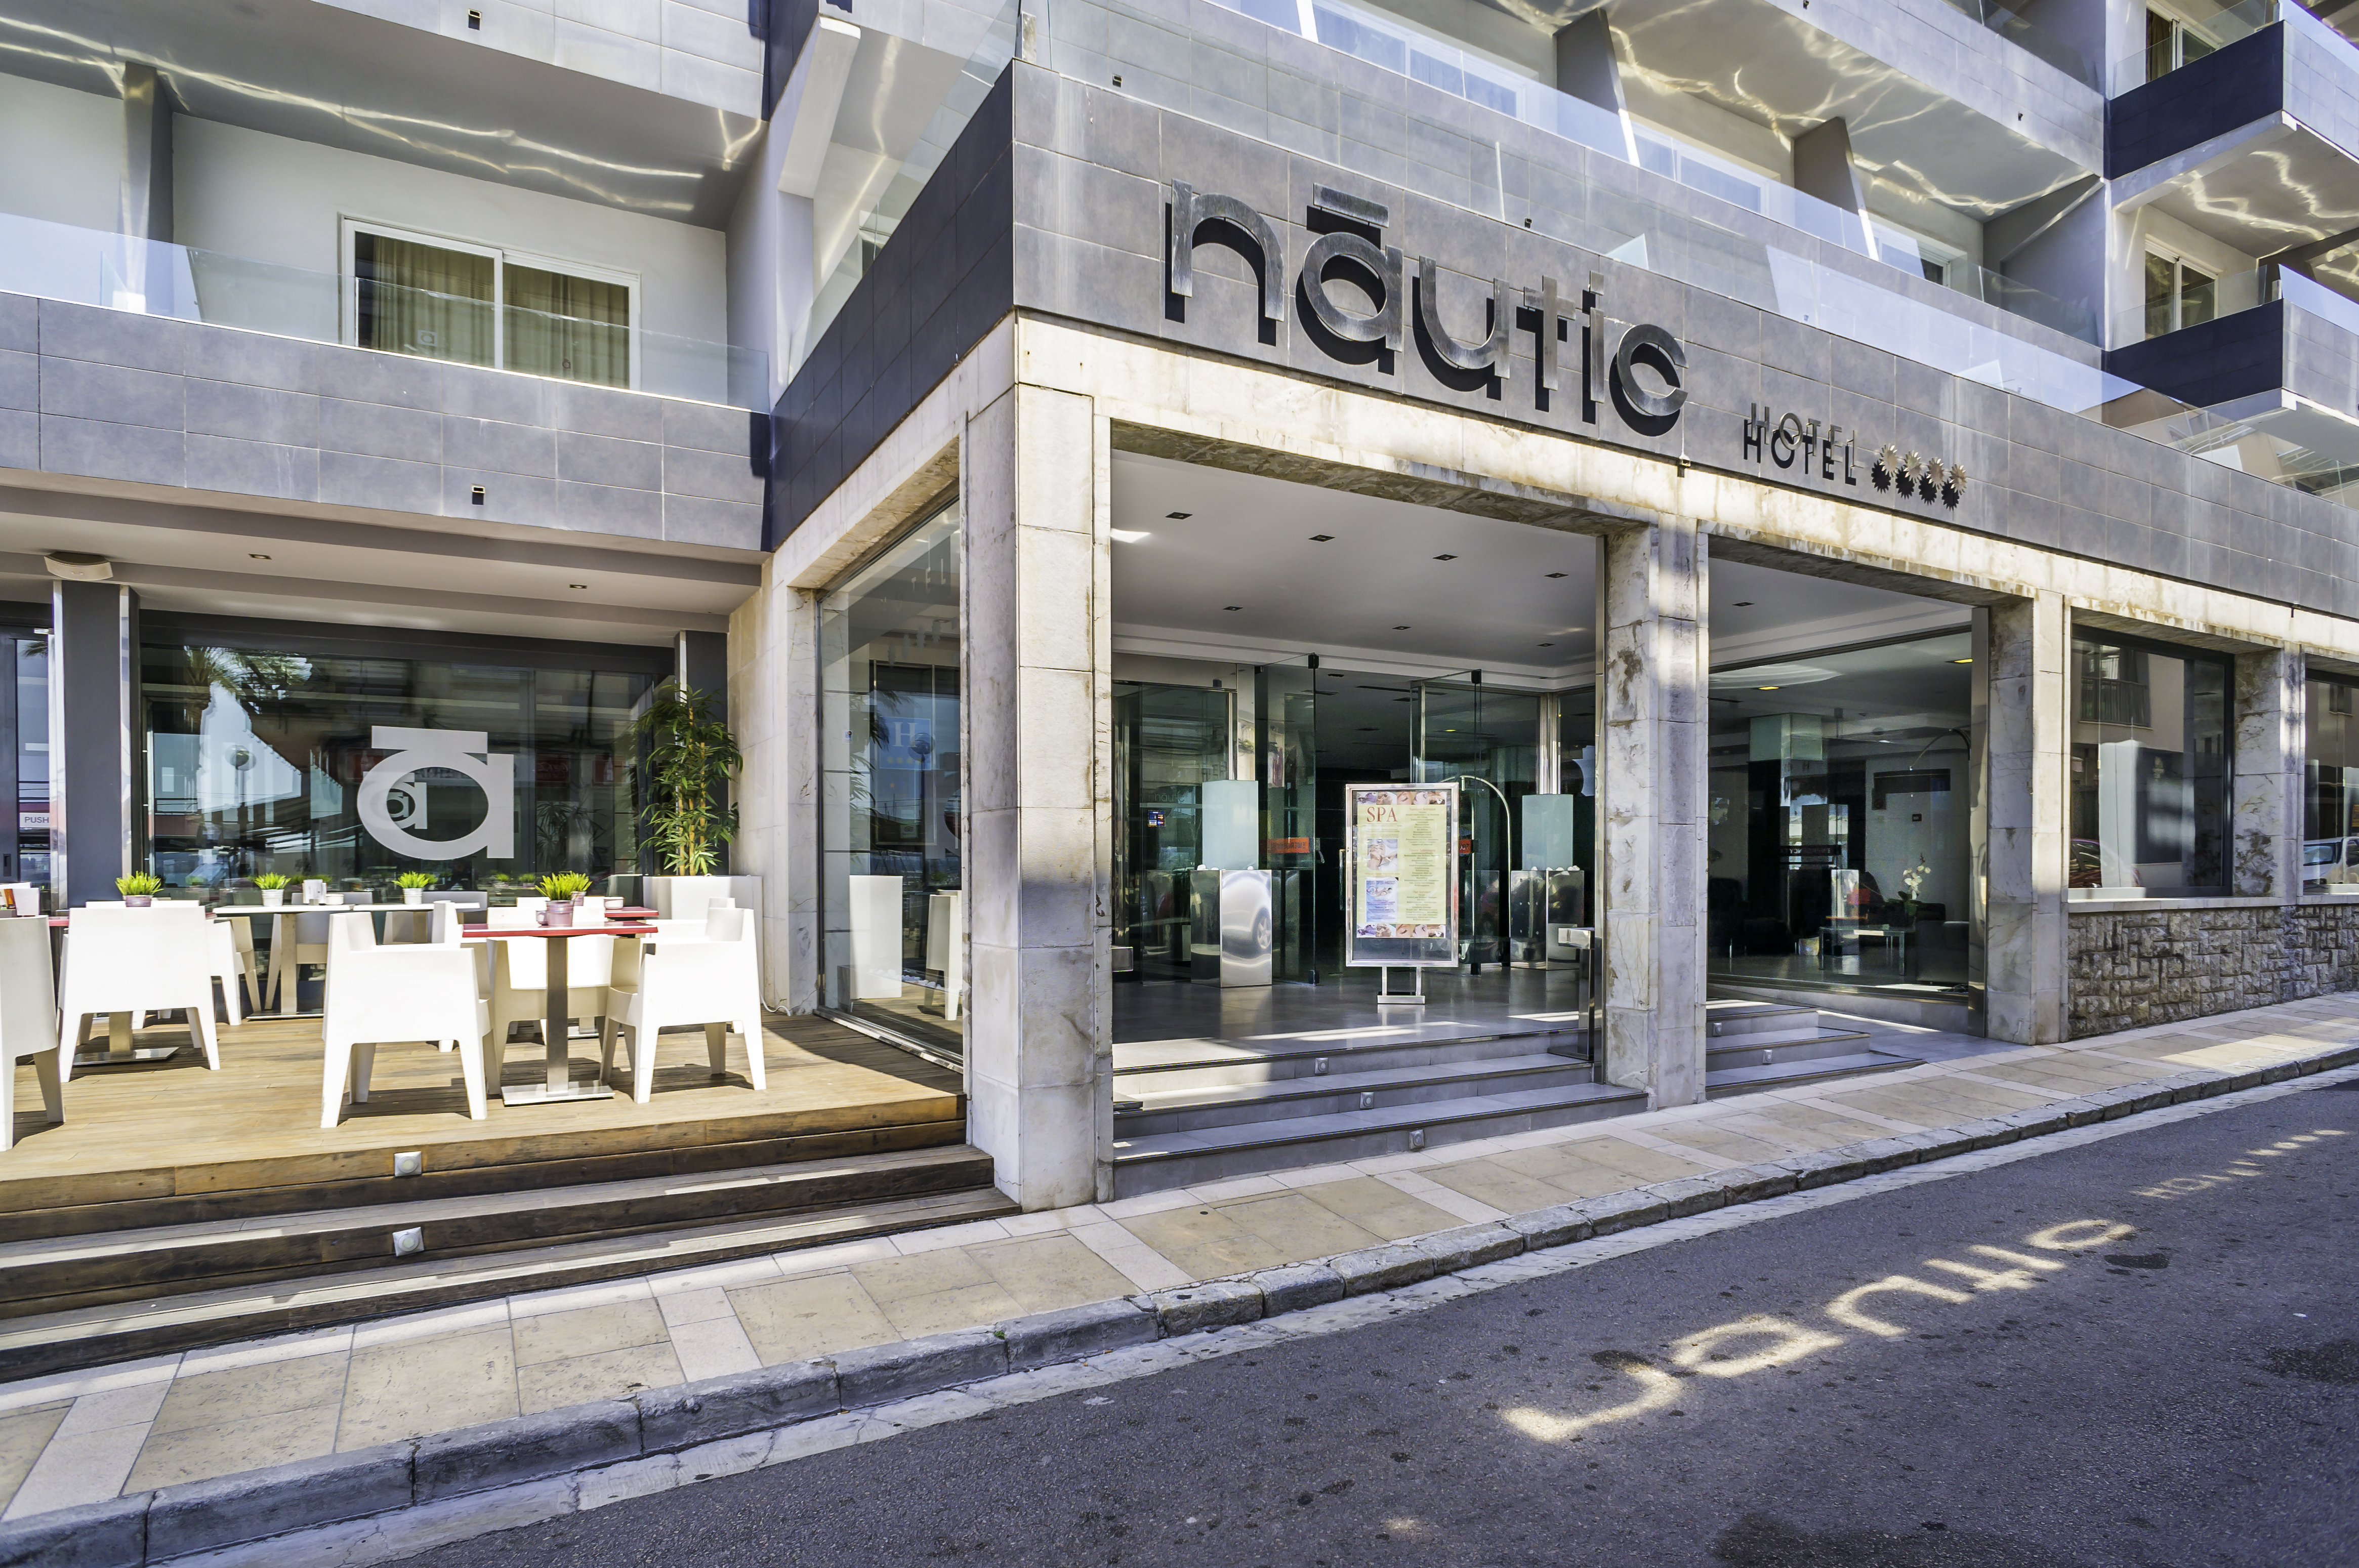 Nautic Hotel and Spa